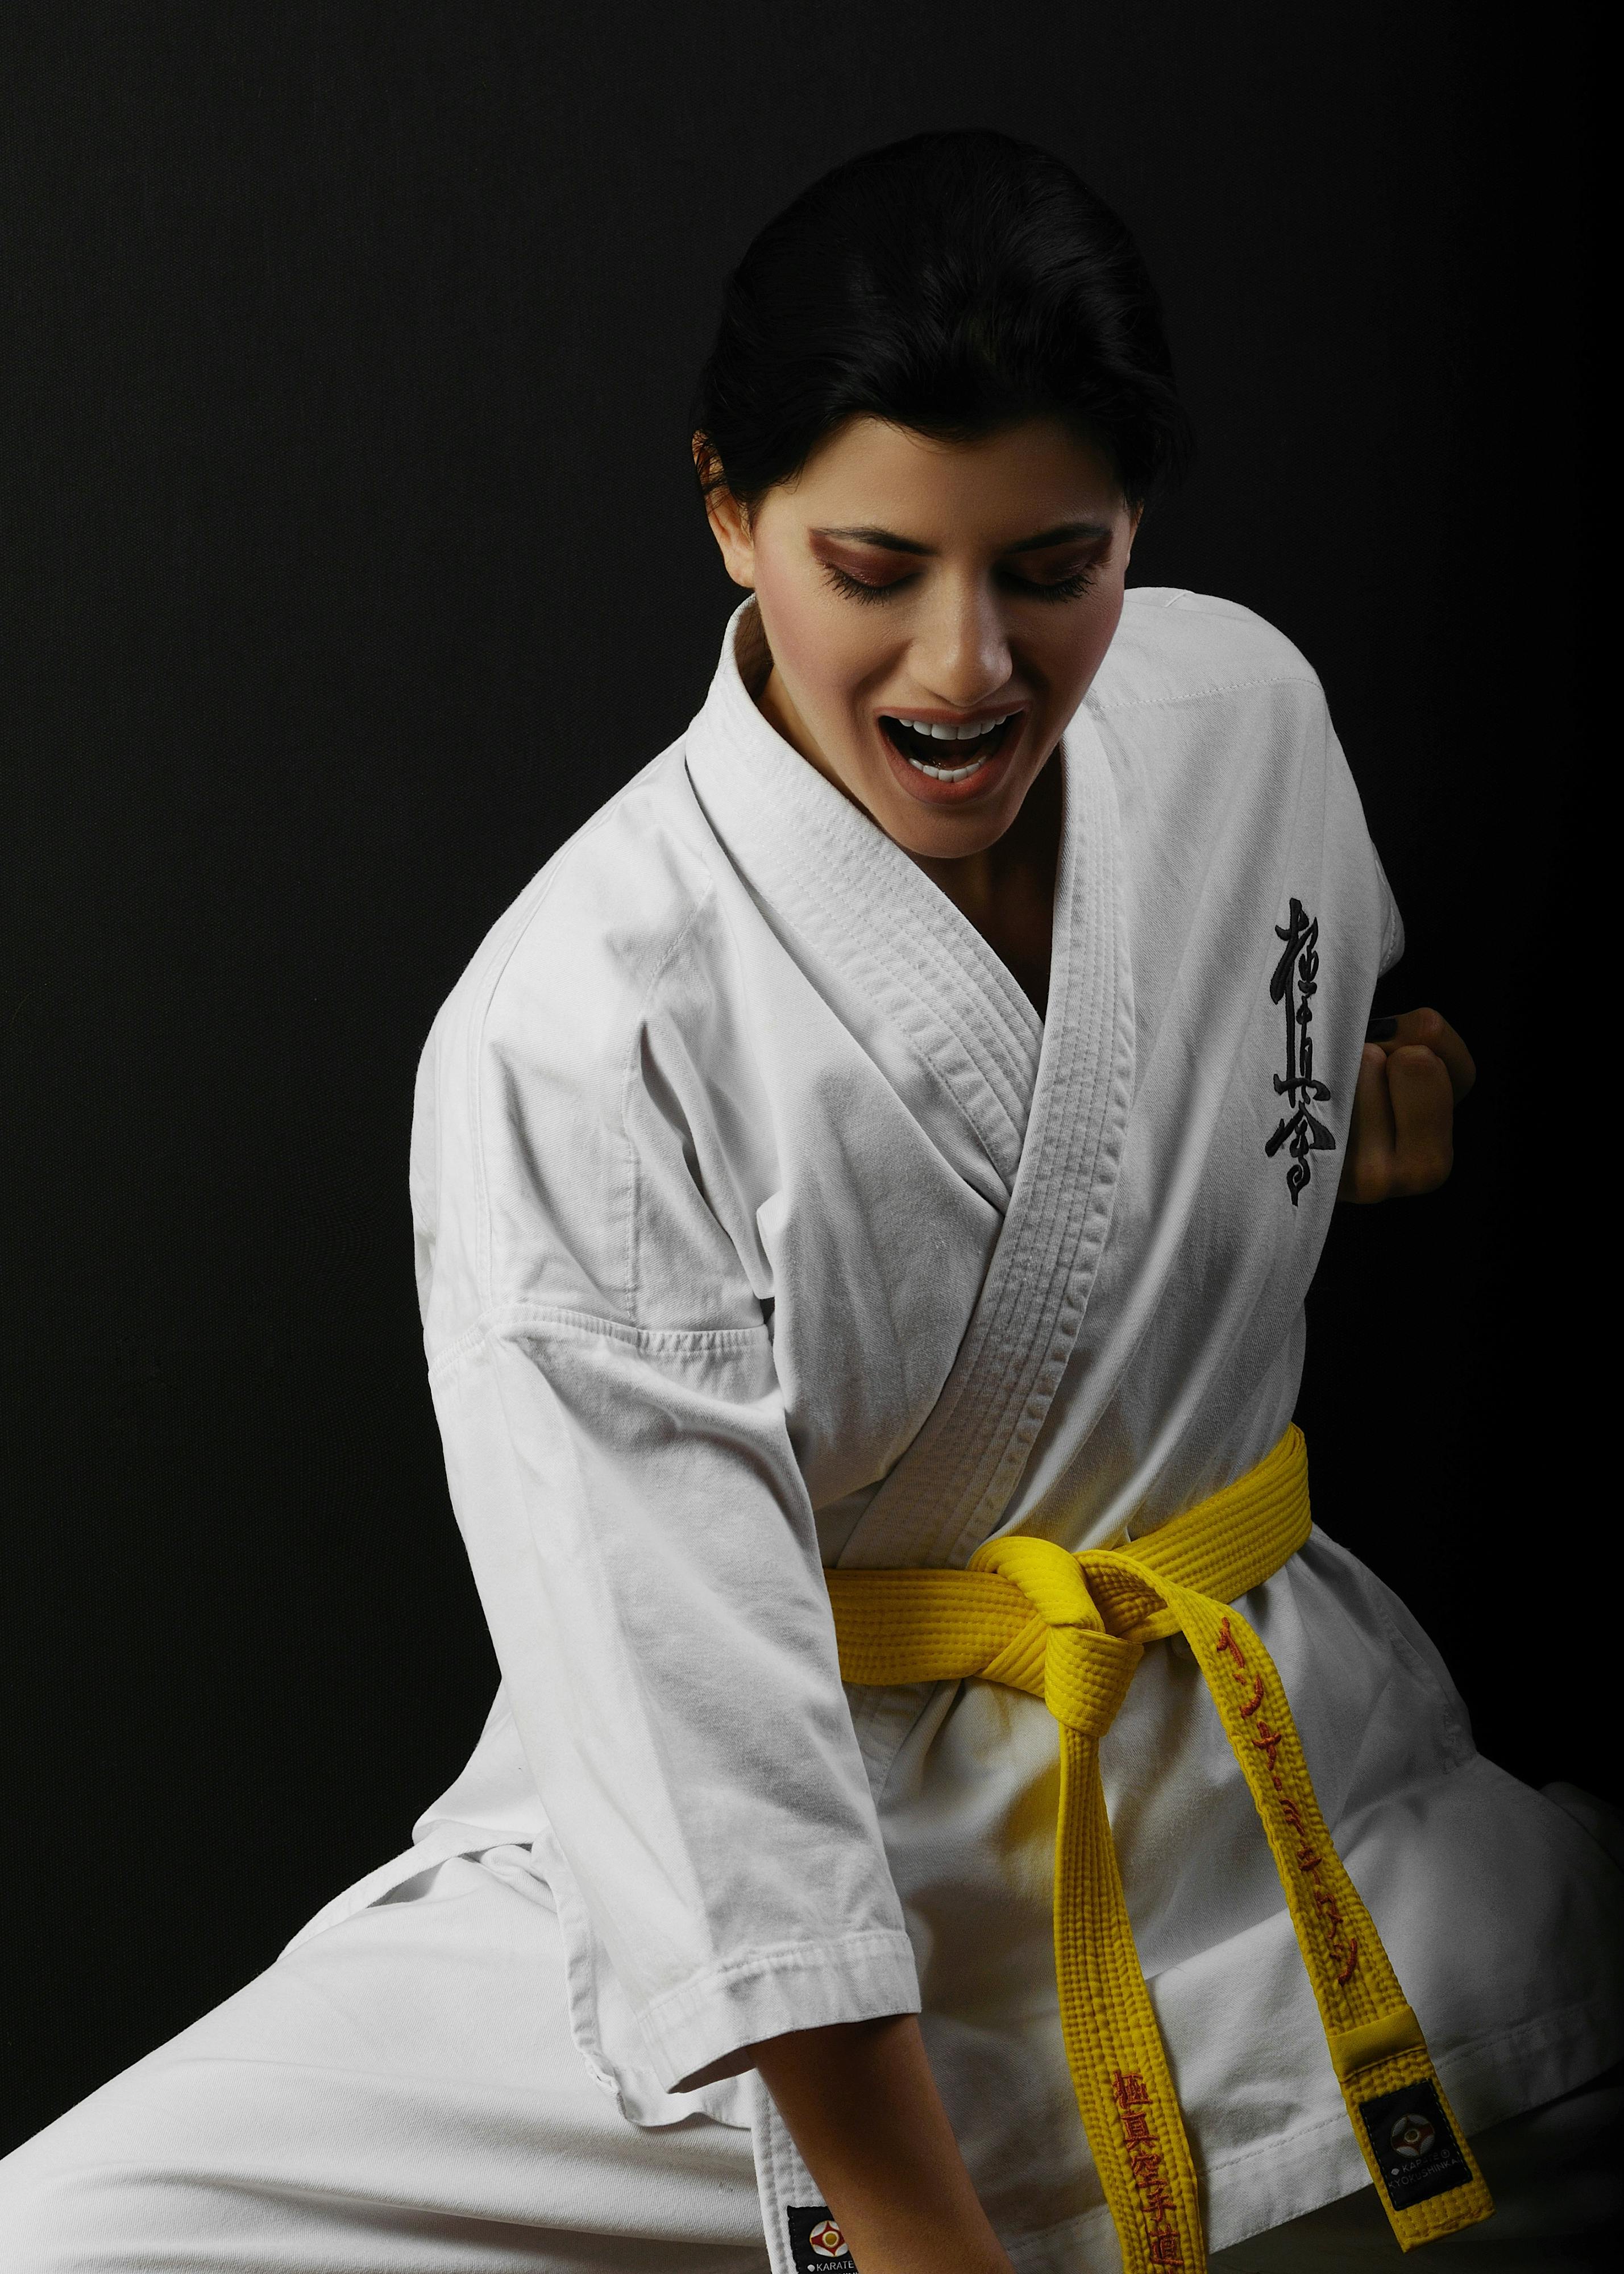 A Girl in White Taekwondo Uniform · Free Stock Photo